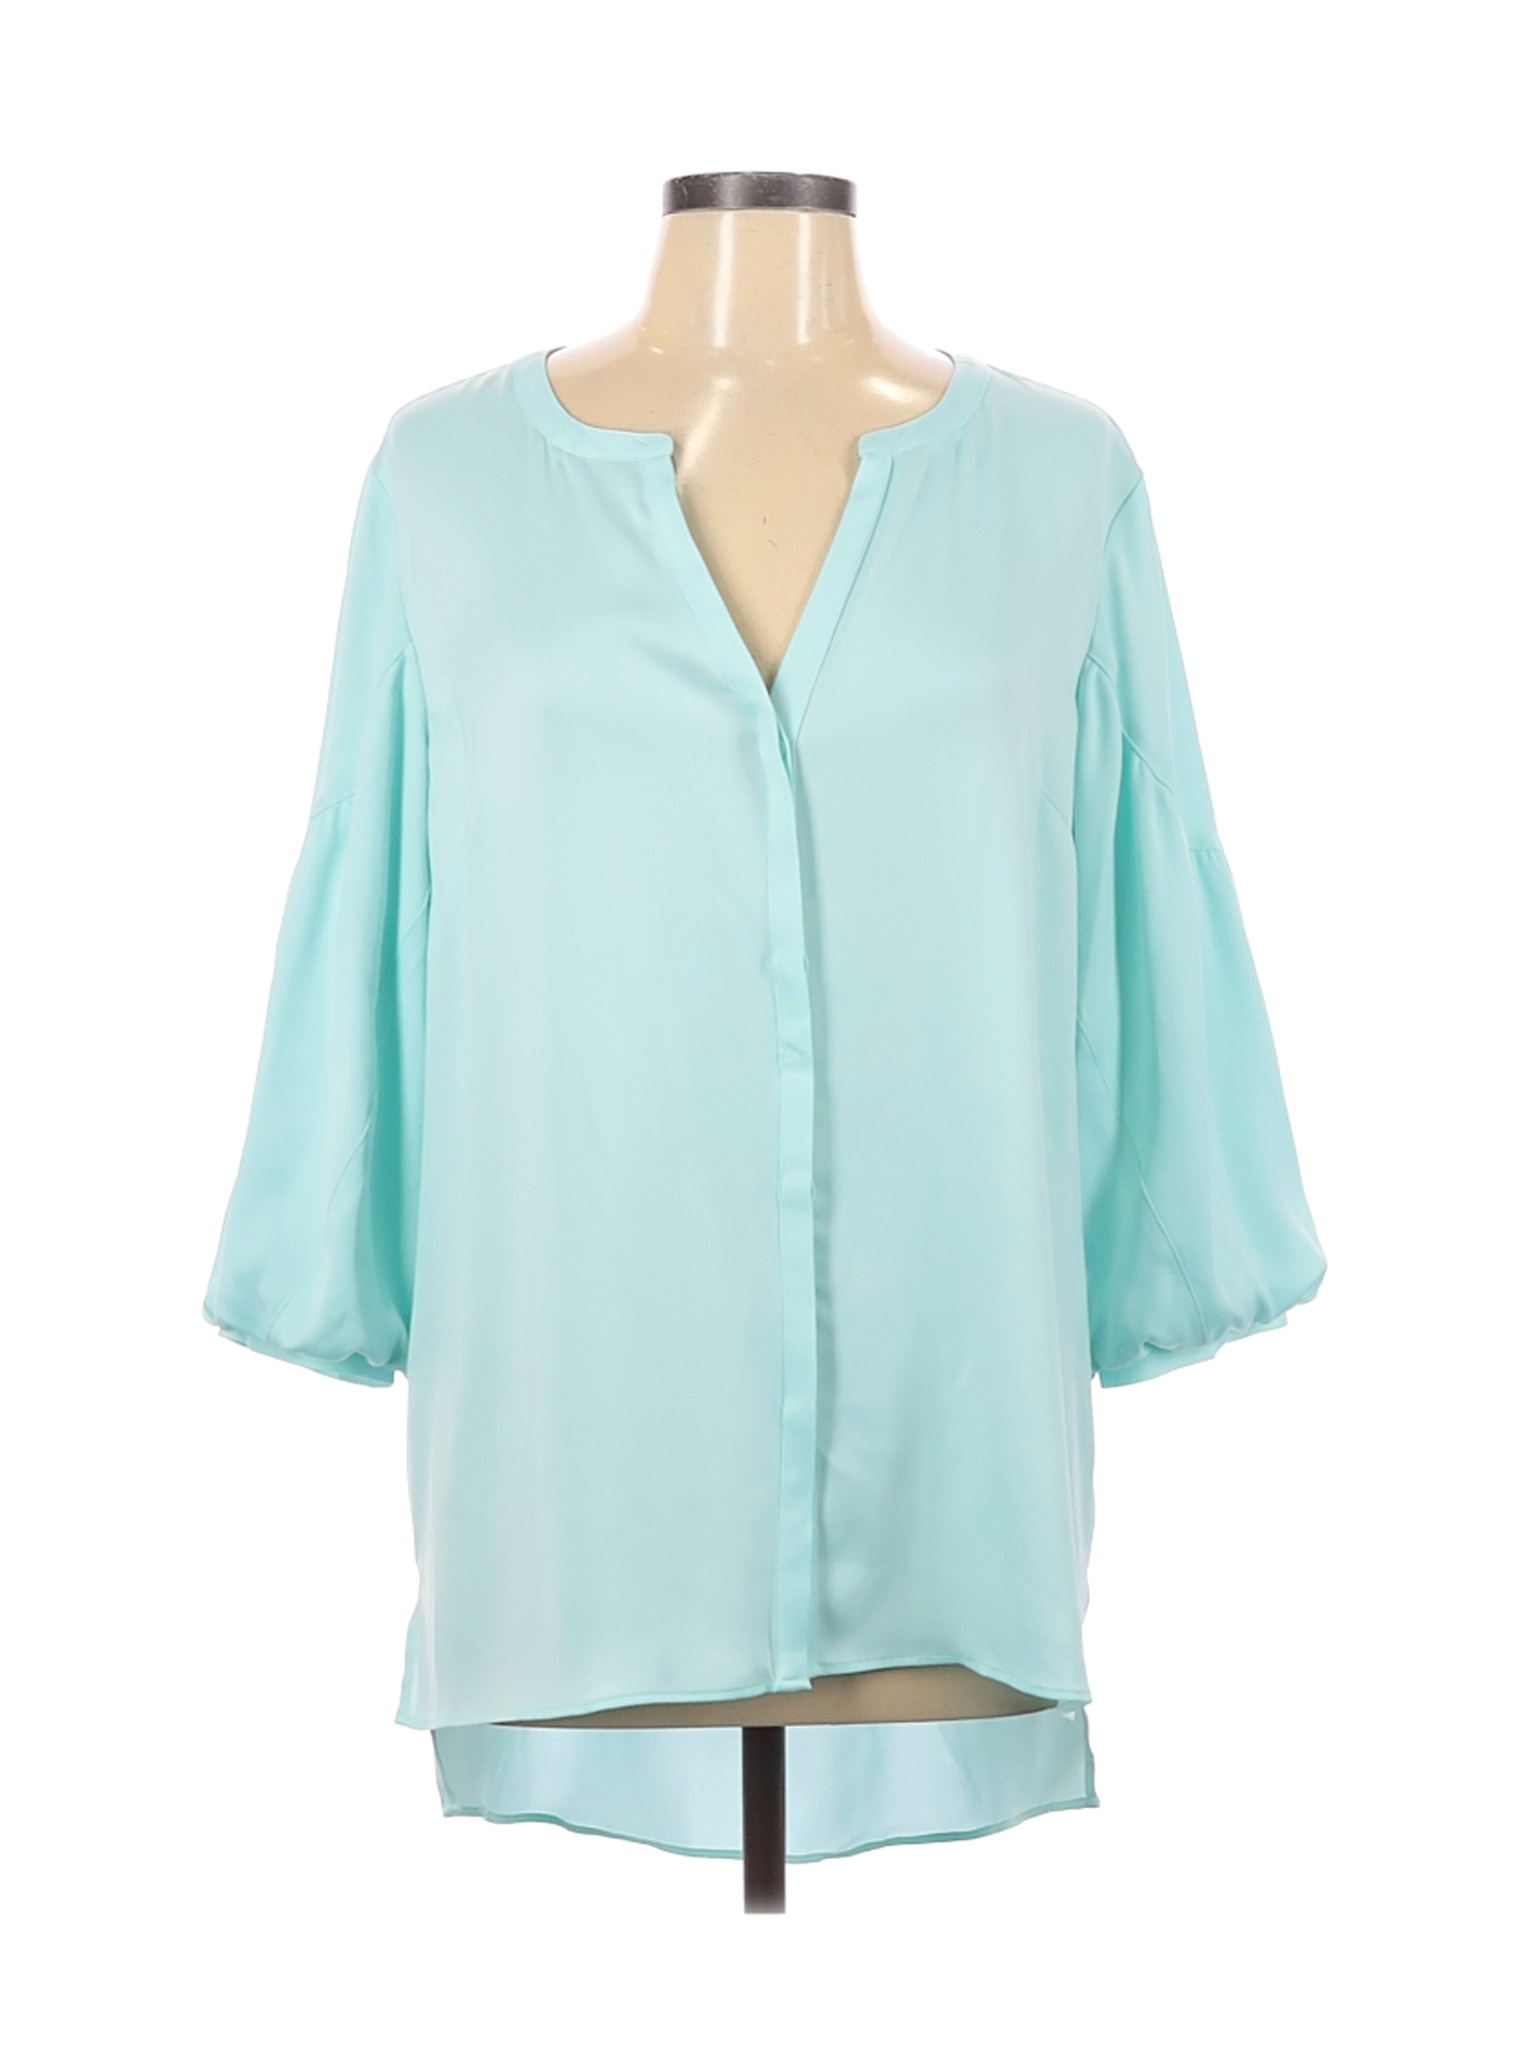 The Limited Women Blue Long Sleeve Blouse L | eBay